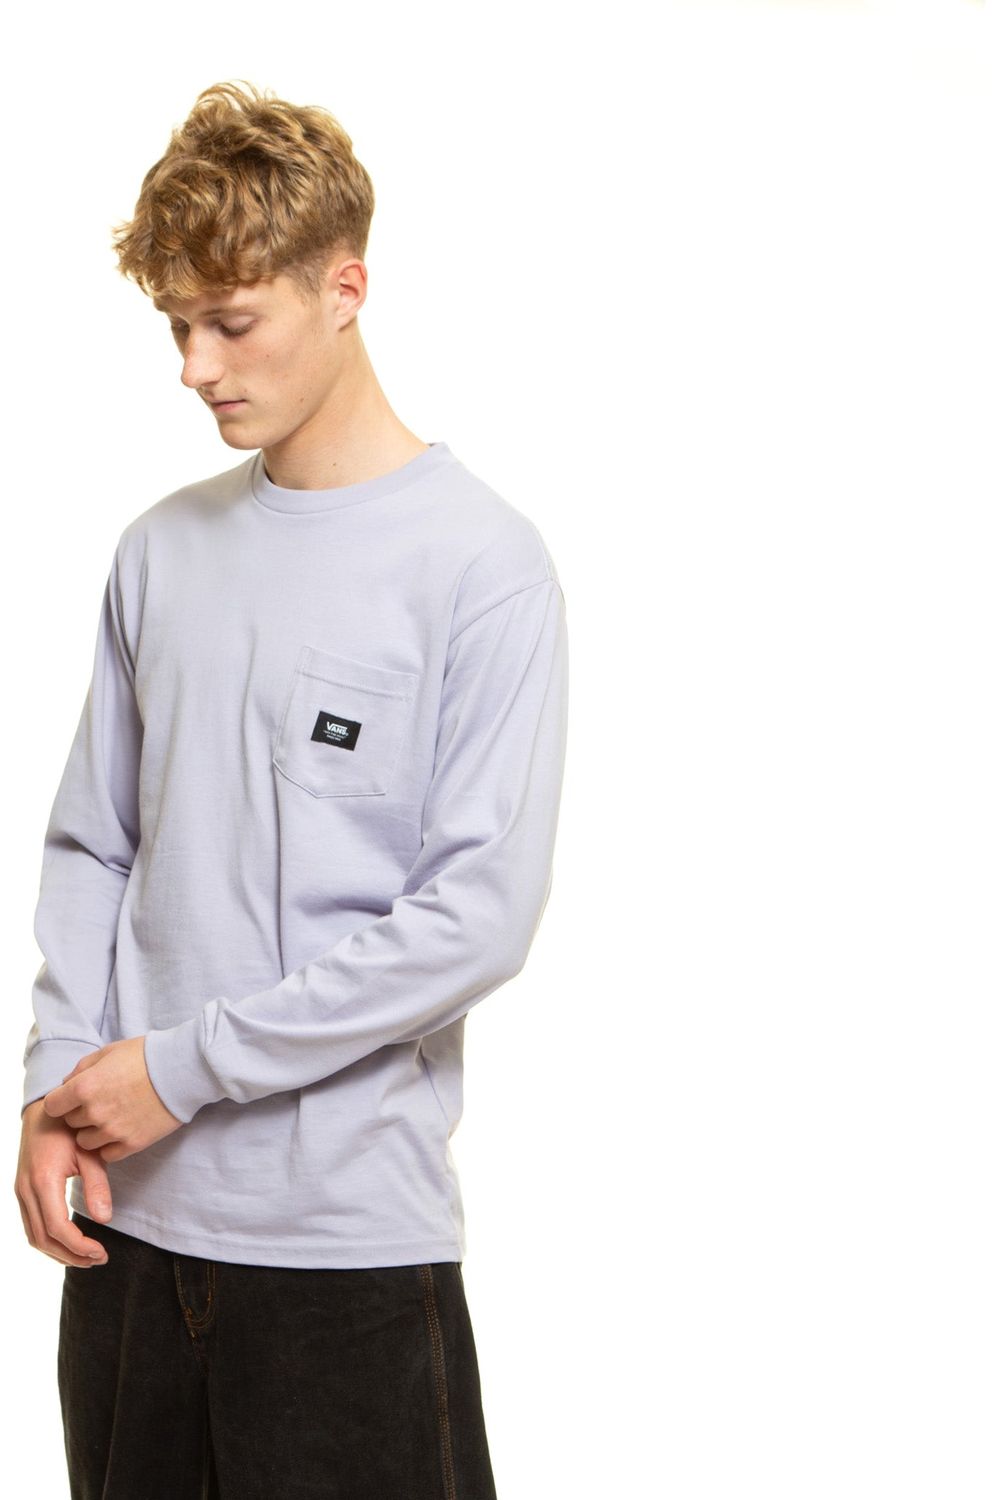 Vans Woven Patch Pocket Long Sleeve T-Shirt Languid Lavender